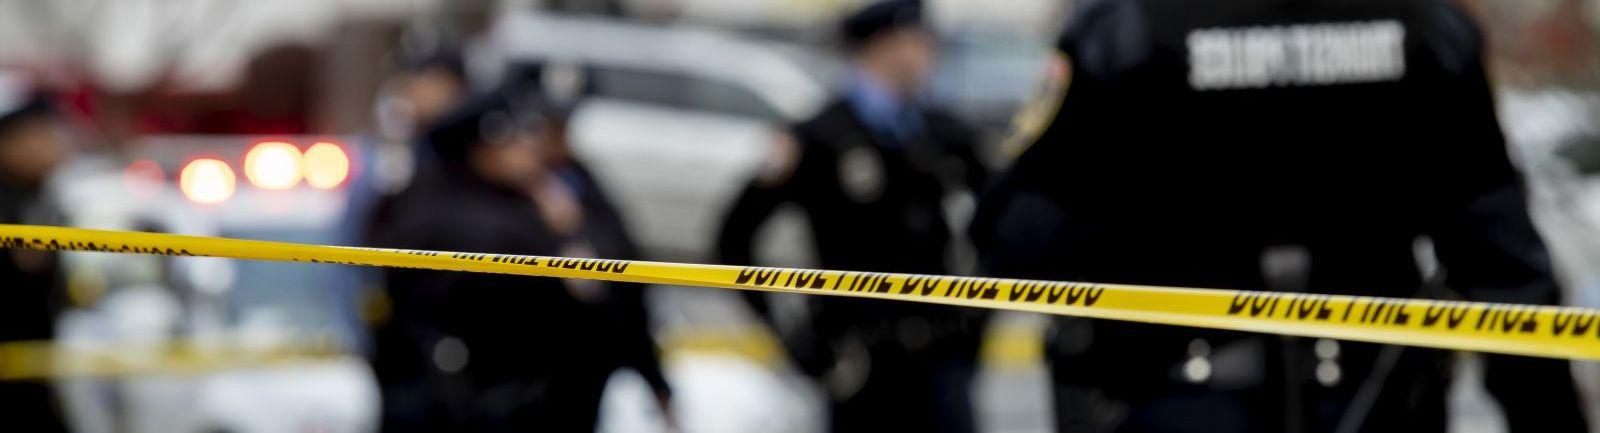 Police cordon off a crime scene using yellow "police tape."